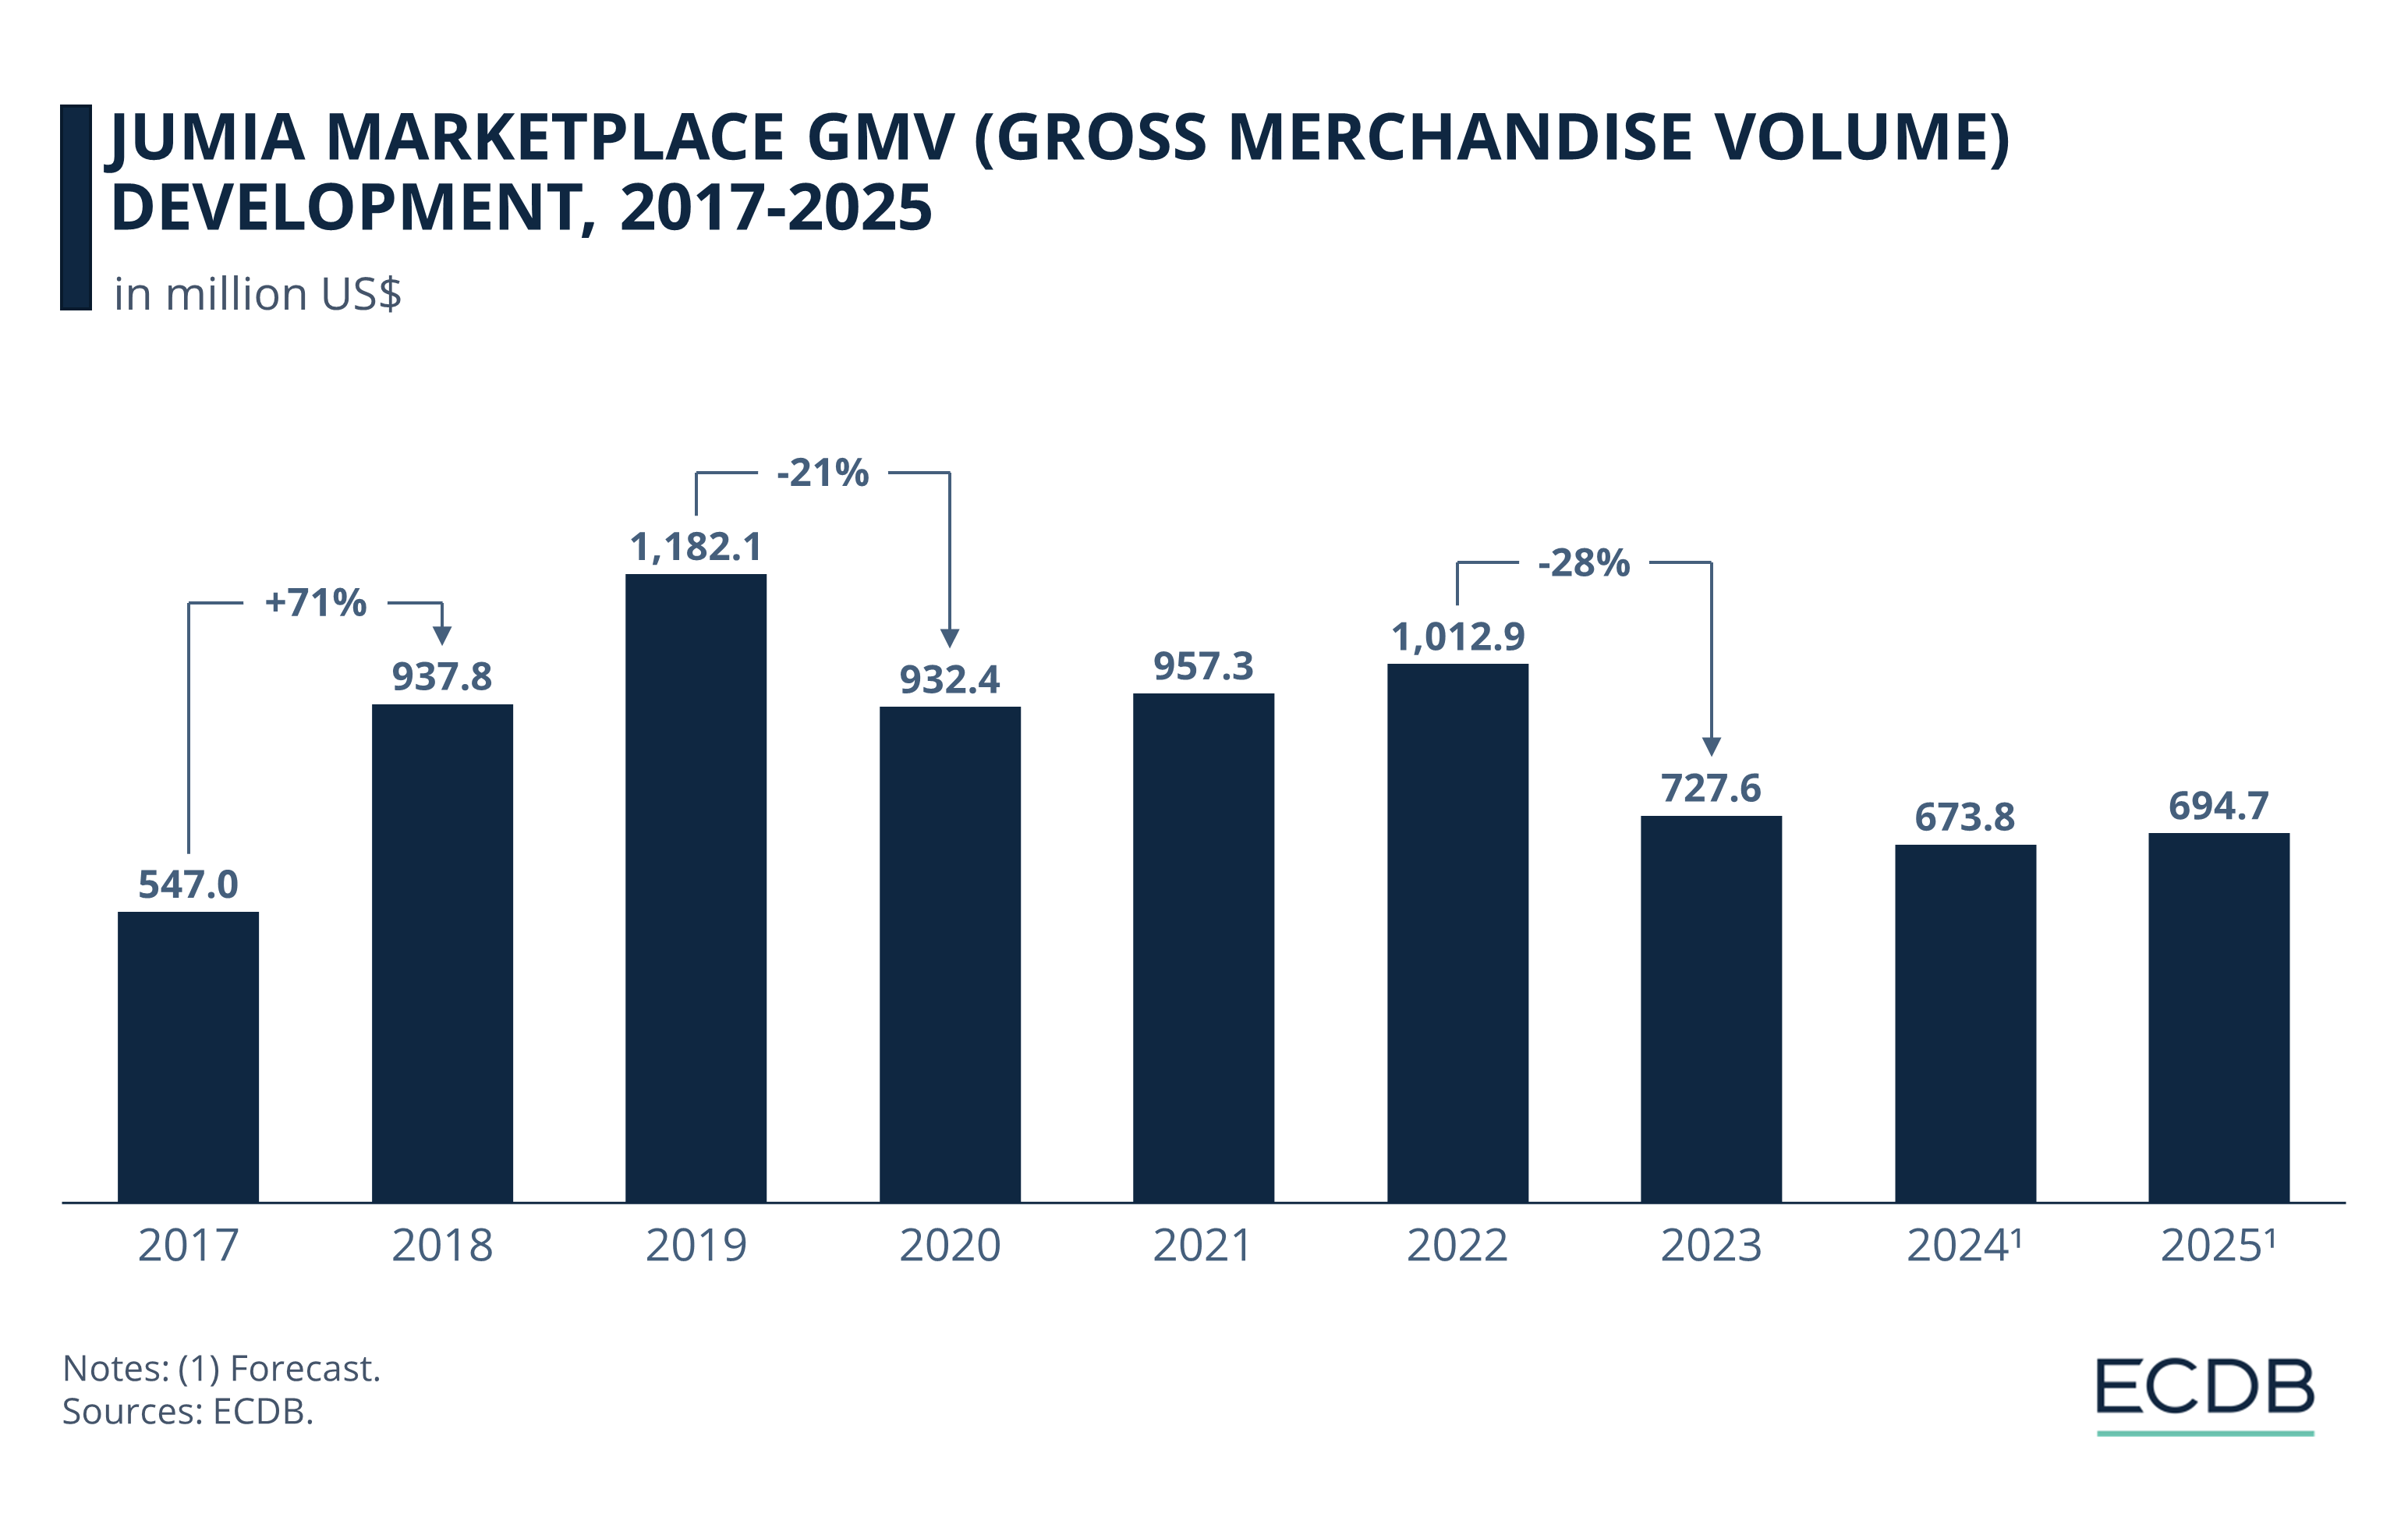 Jumia Marketplace GMV (Gross Merchandise Volume) Development, 2017-2025